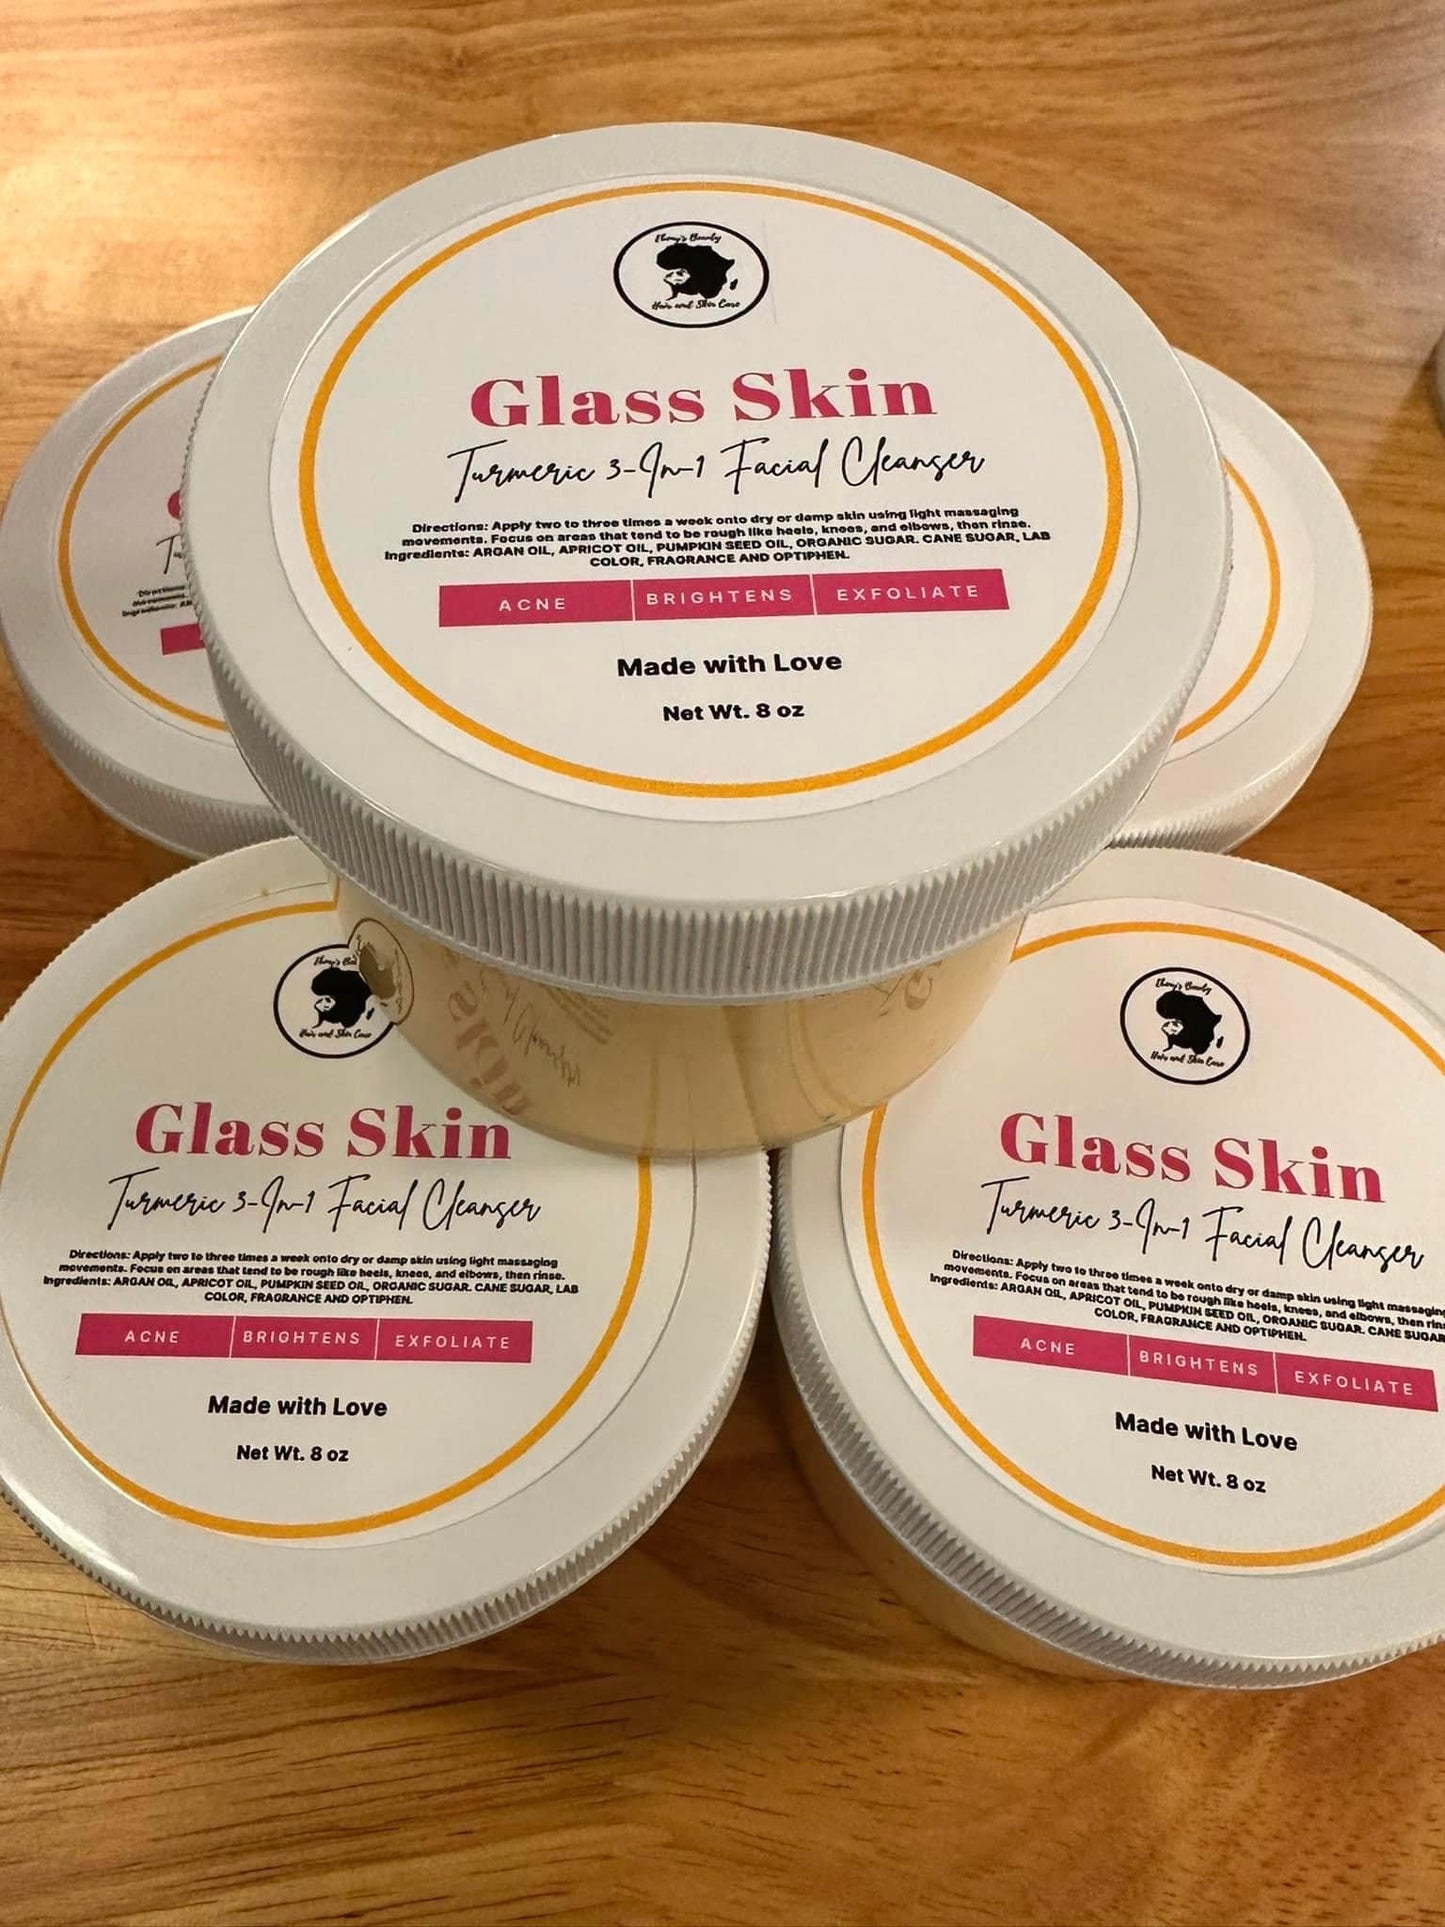 Glass Skin Turmeric 3-In-1 Facial Cleanser